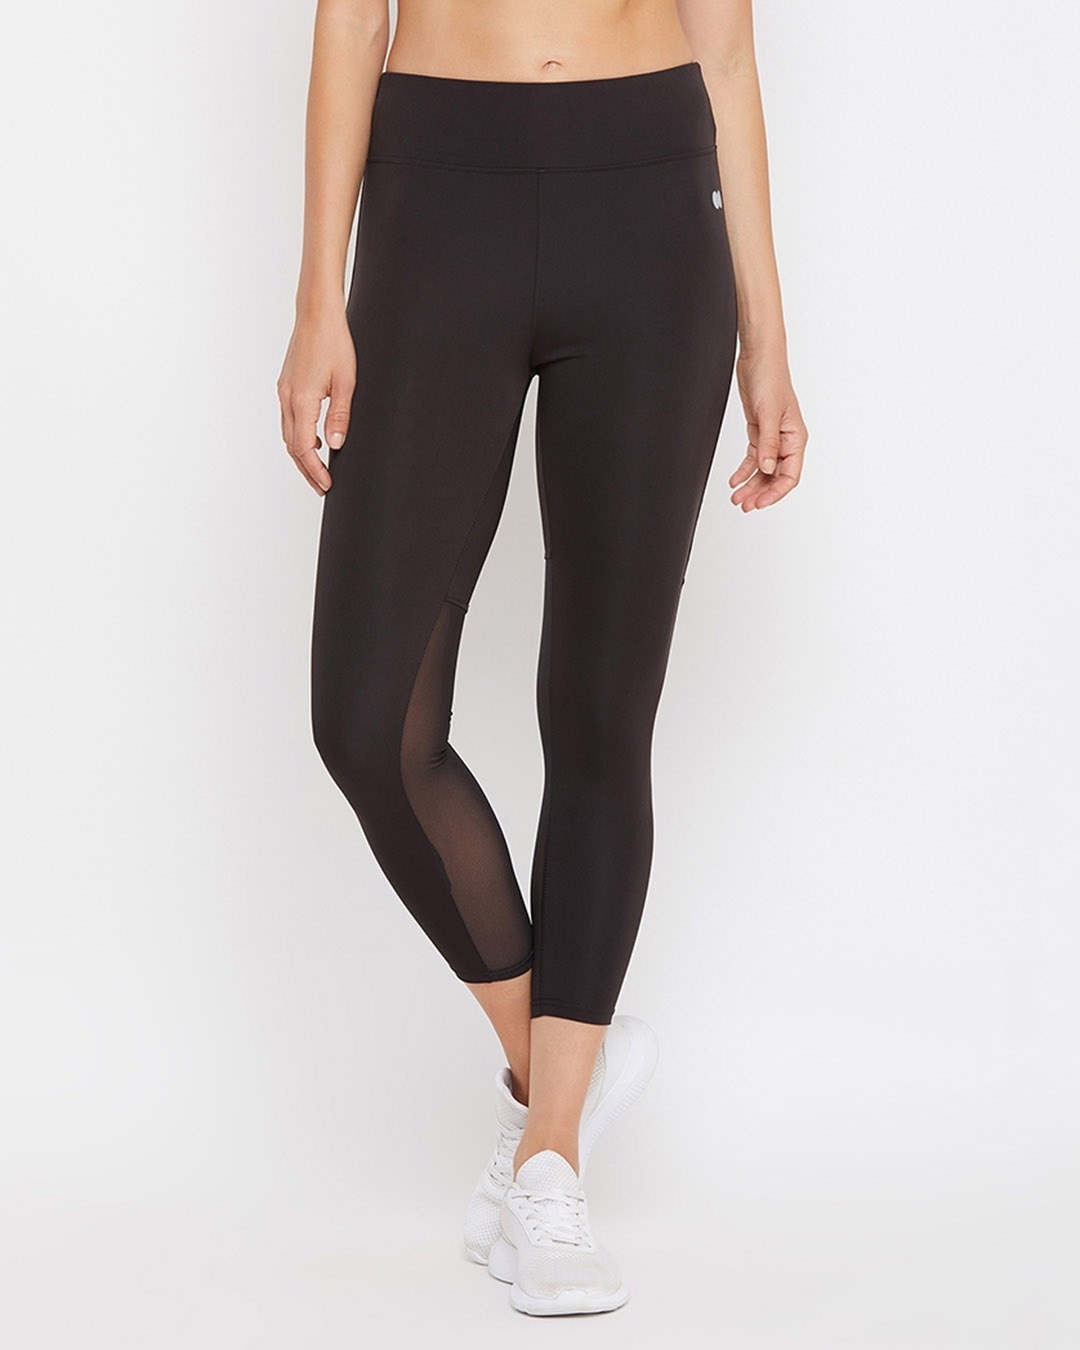 Calvin Klein Dressy Gray/Black Plaid Legging/Slacks 🍁 | Black plaid,  Dressy, Clothes design